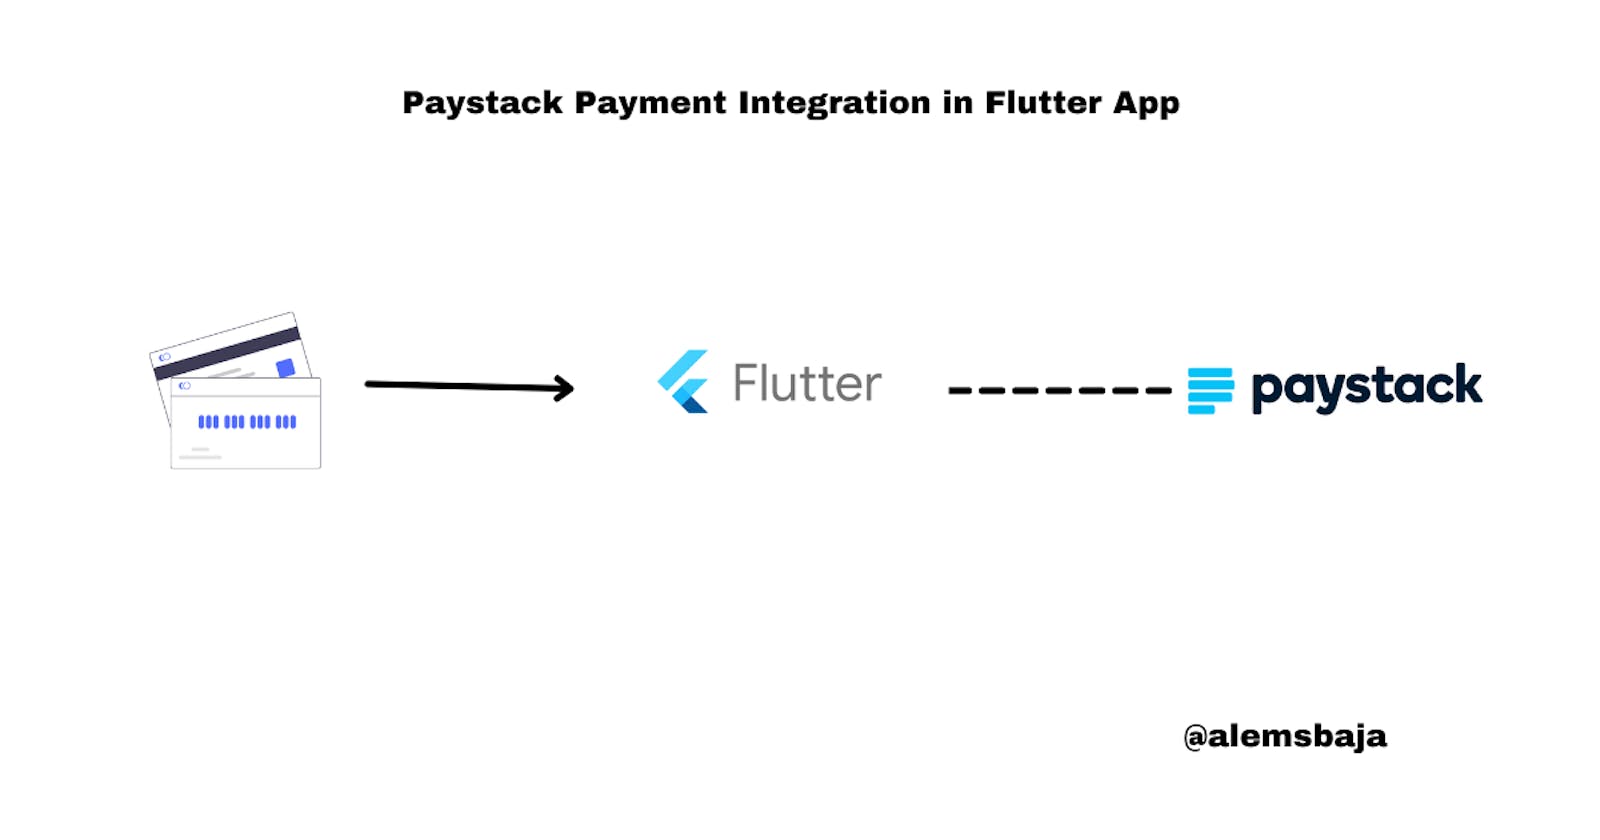 Paystack Payment Integration in Flutter App